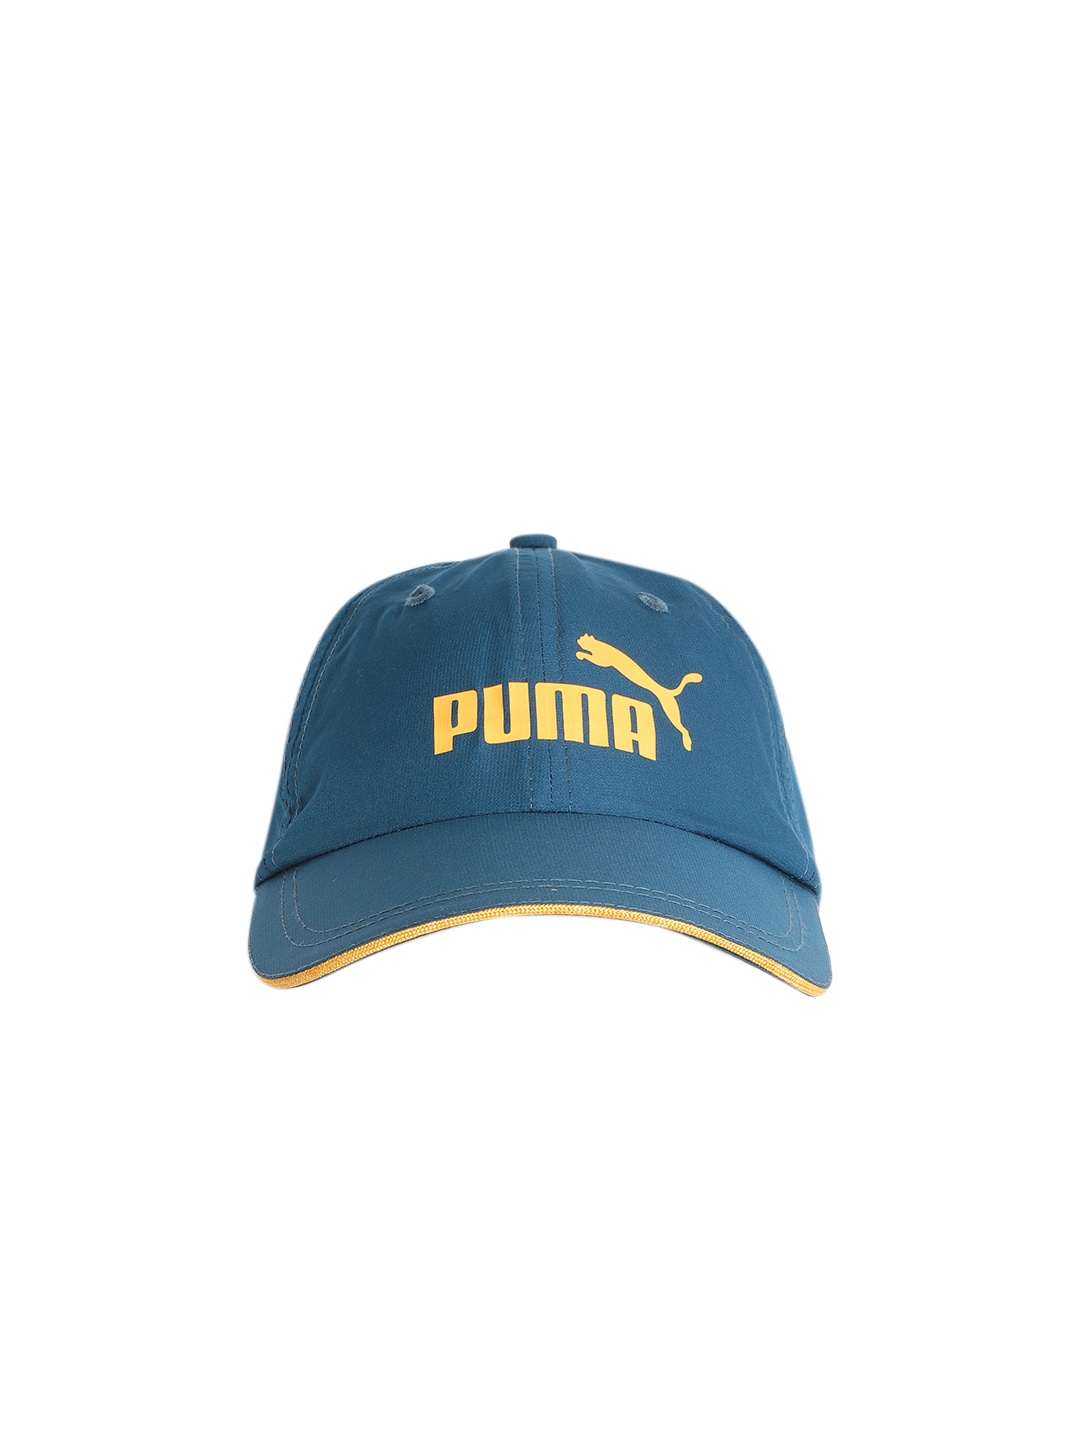 Accessories Caps | Puma Unisex Teal Blue & Mustard Yellow Performance Visor Brand Logo Print Sports Cap - SI63563